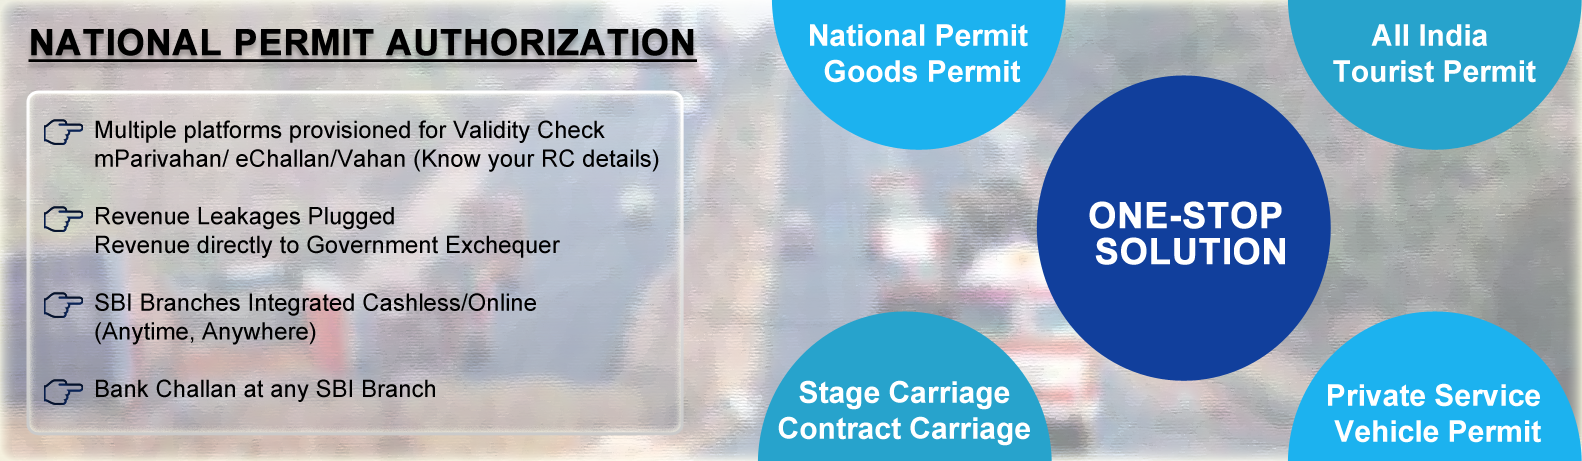 National Permit Authorization